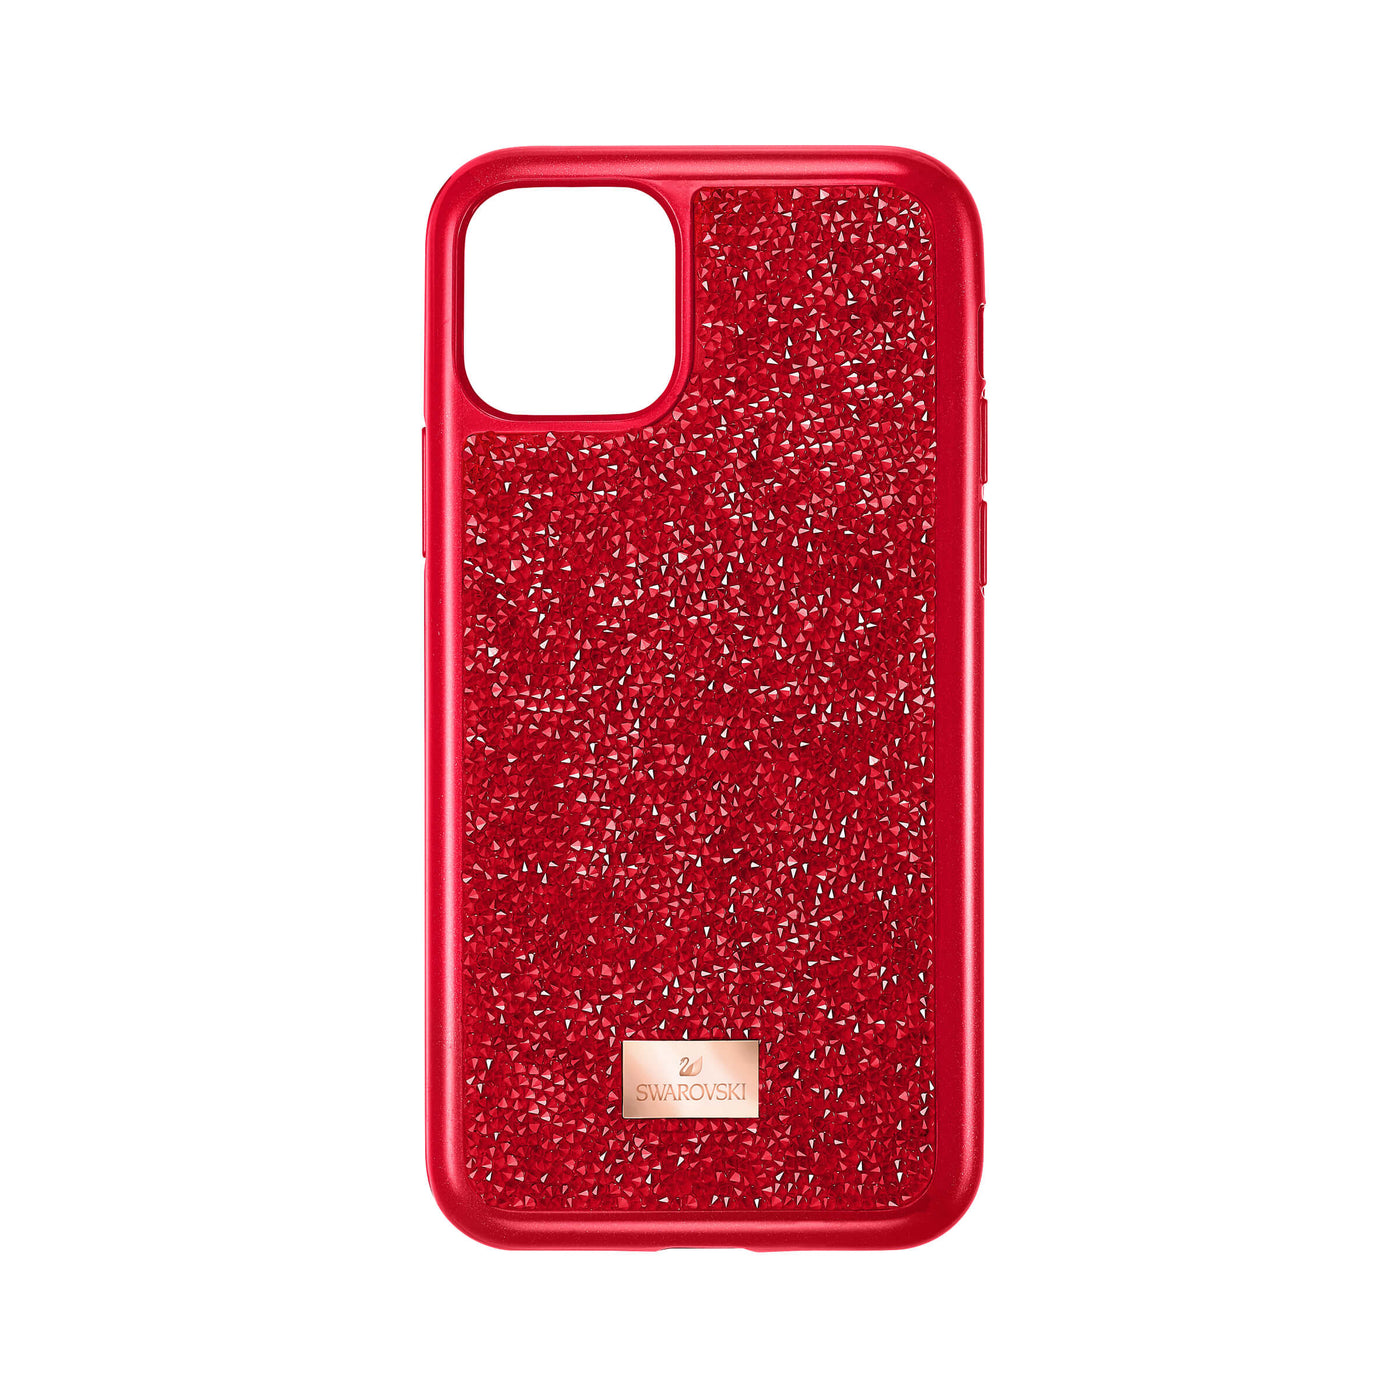 SWAROVSKI כיסוי לאייפון GLAM ROCK iPhone® 11 Pro אדום